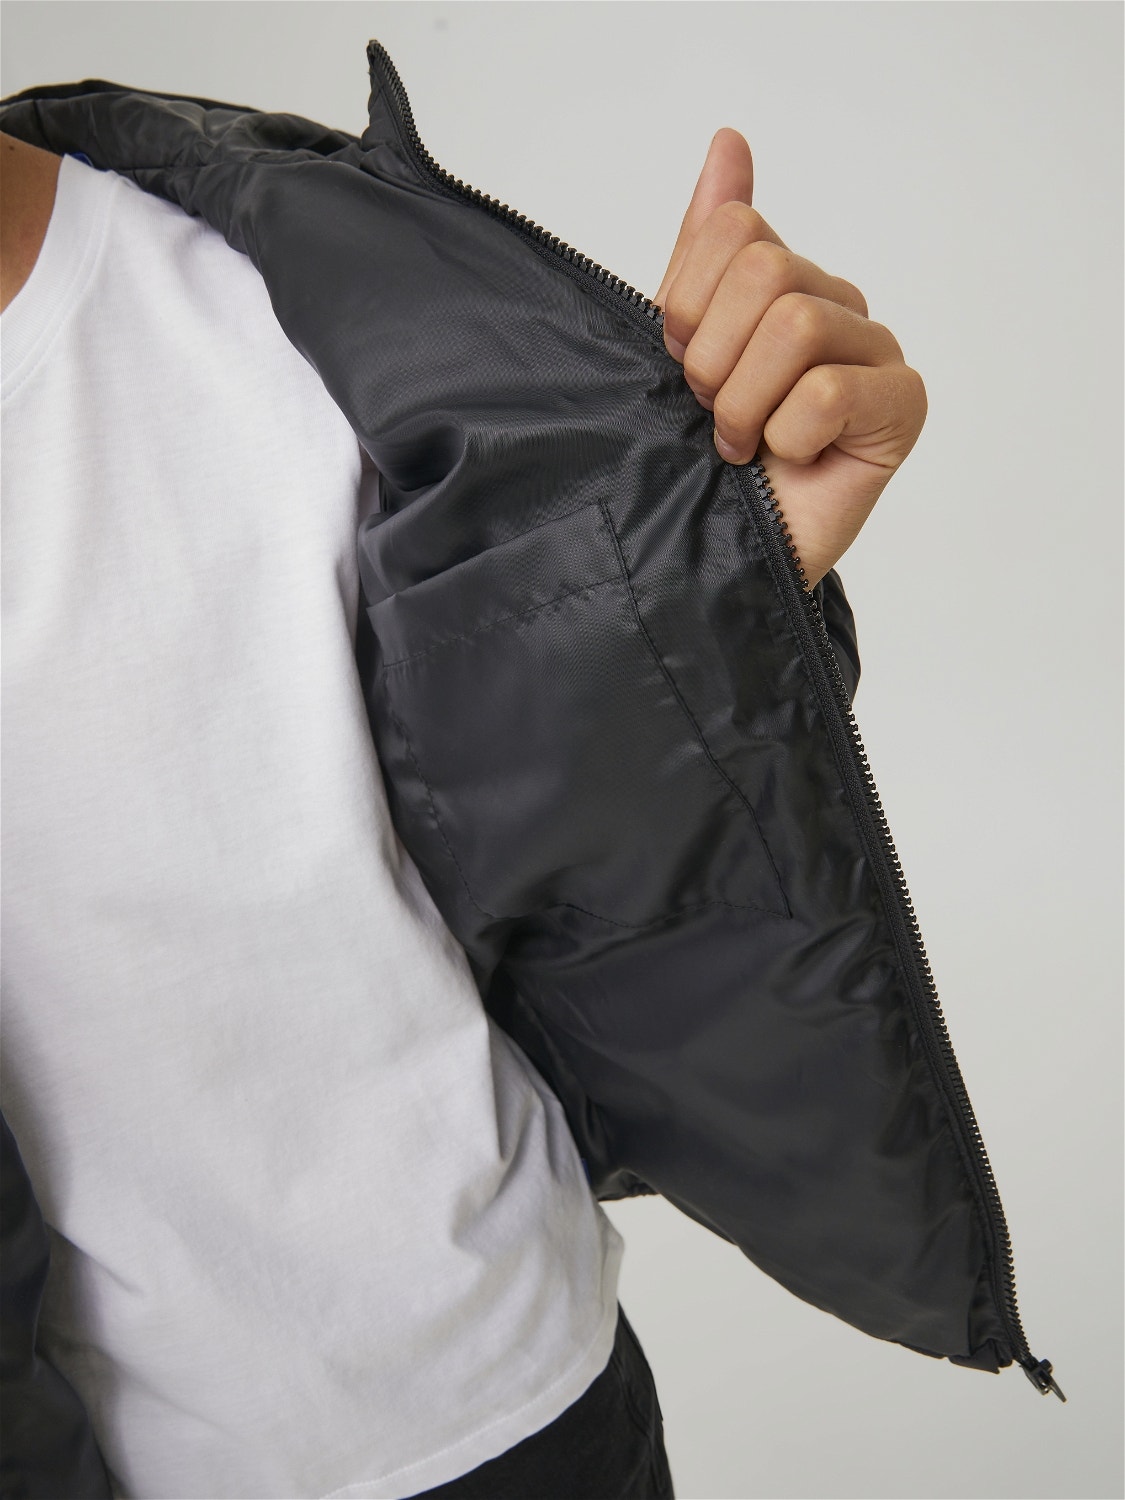 Jack & Jones Puffer jacket For boys -Black - 12212402